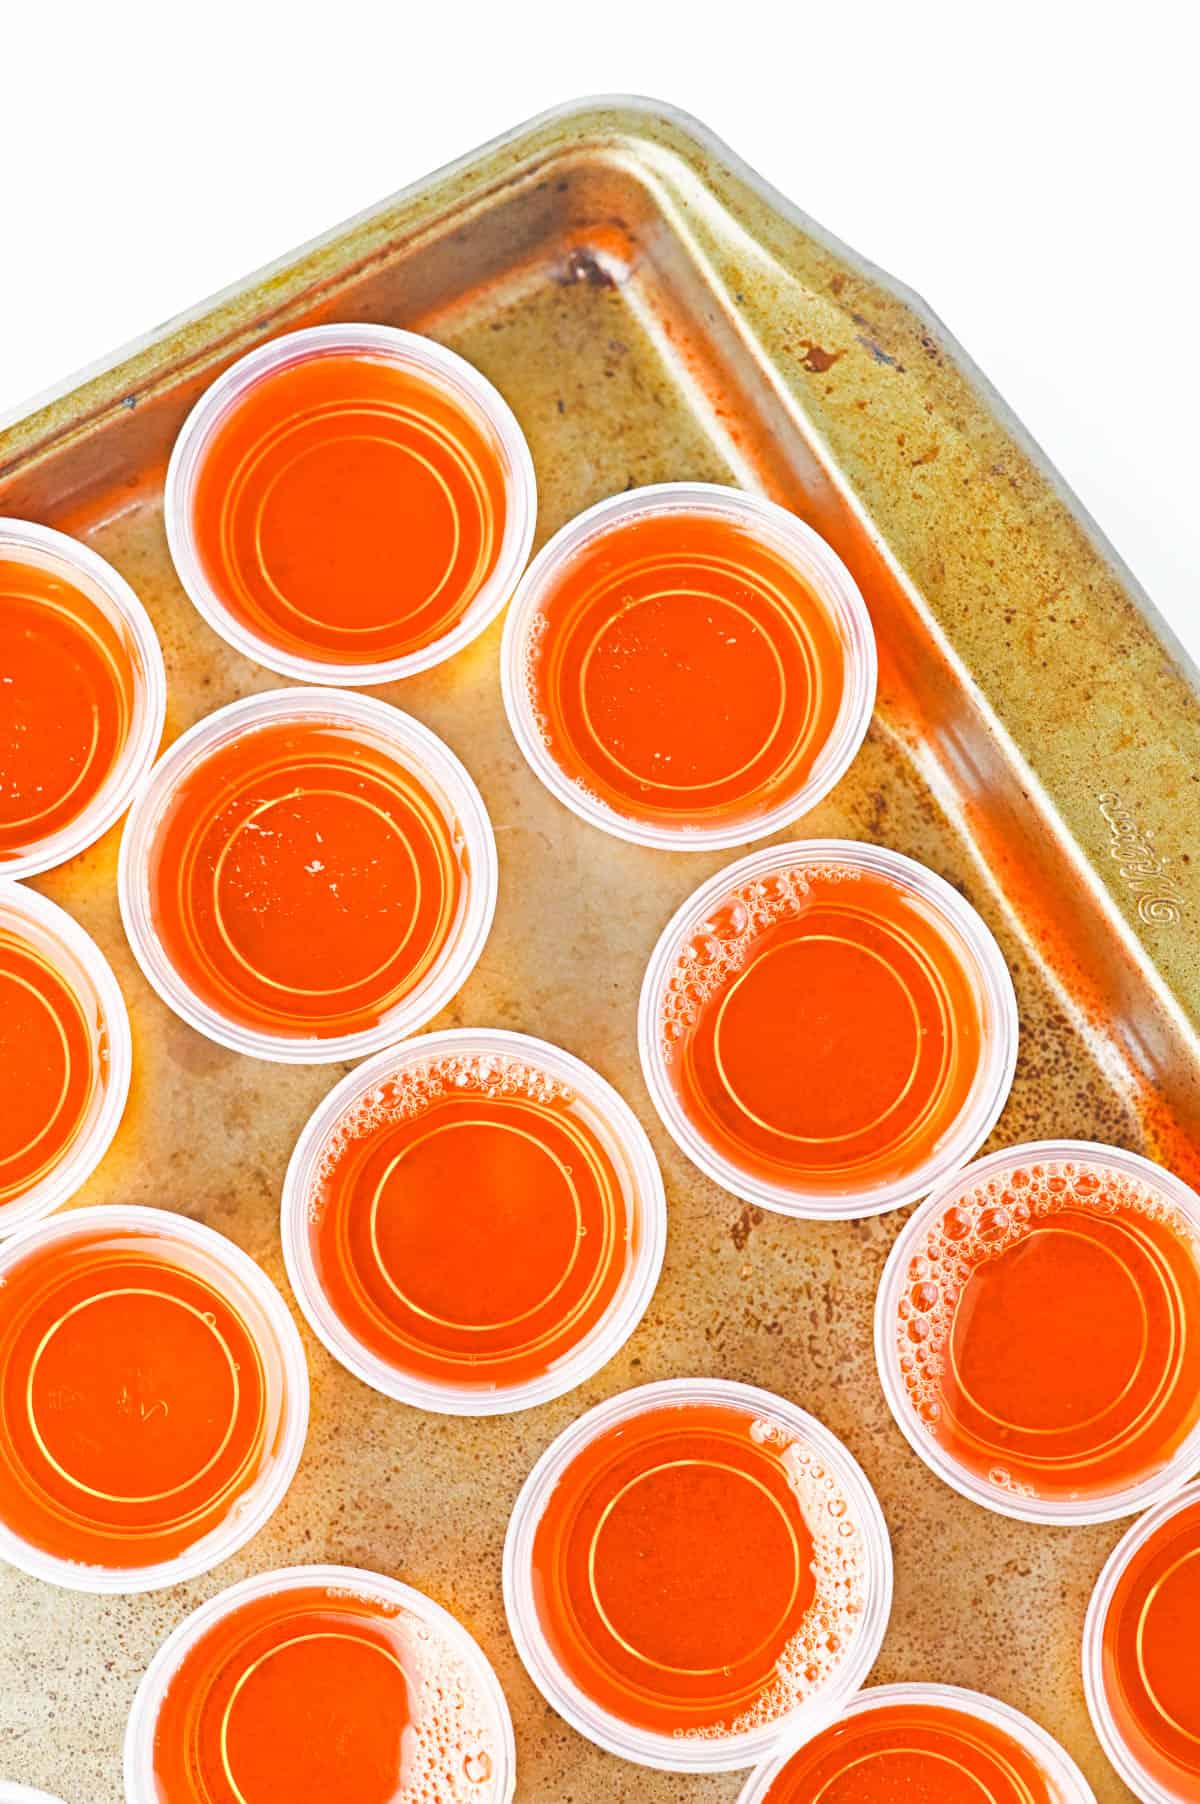 A tray of orange Jello shots.